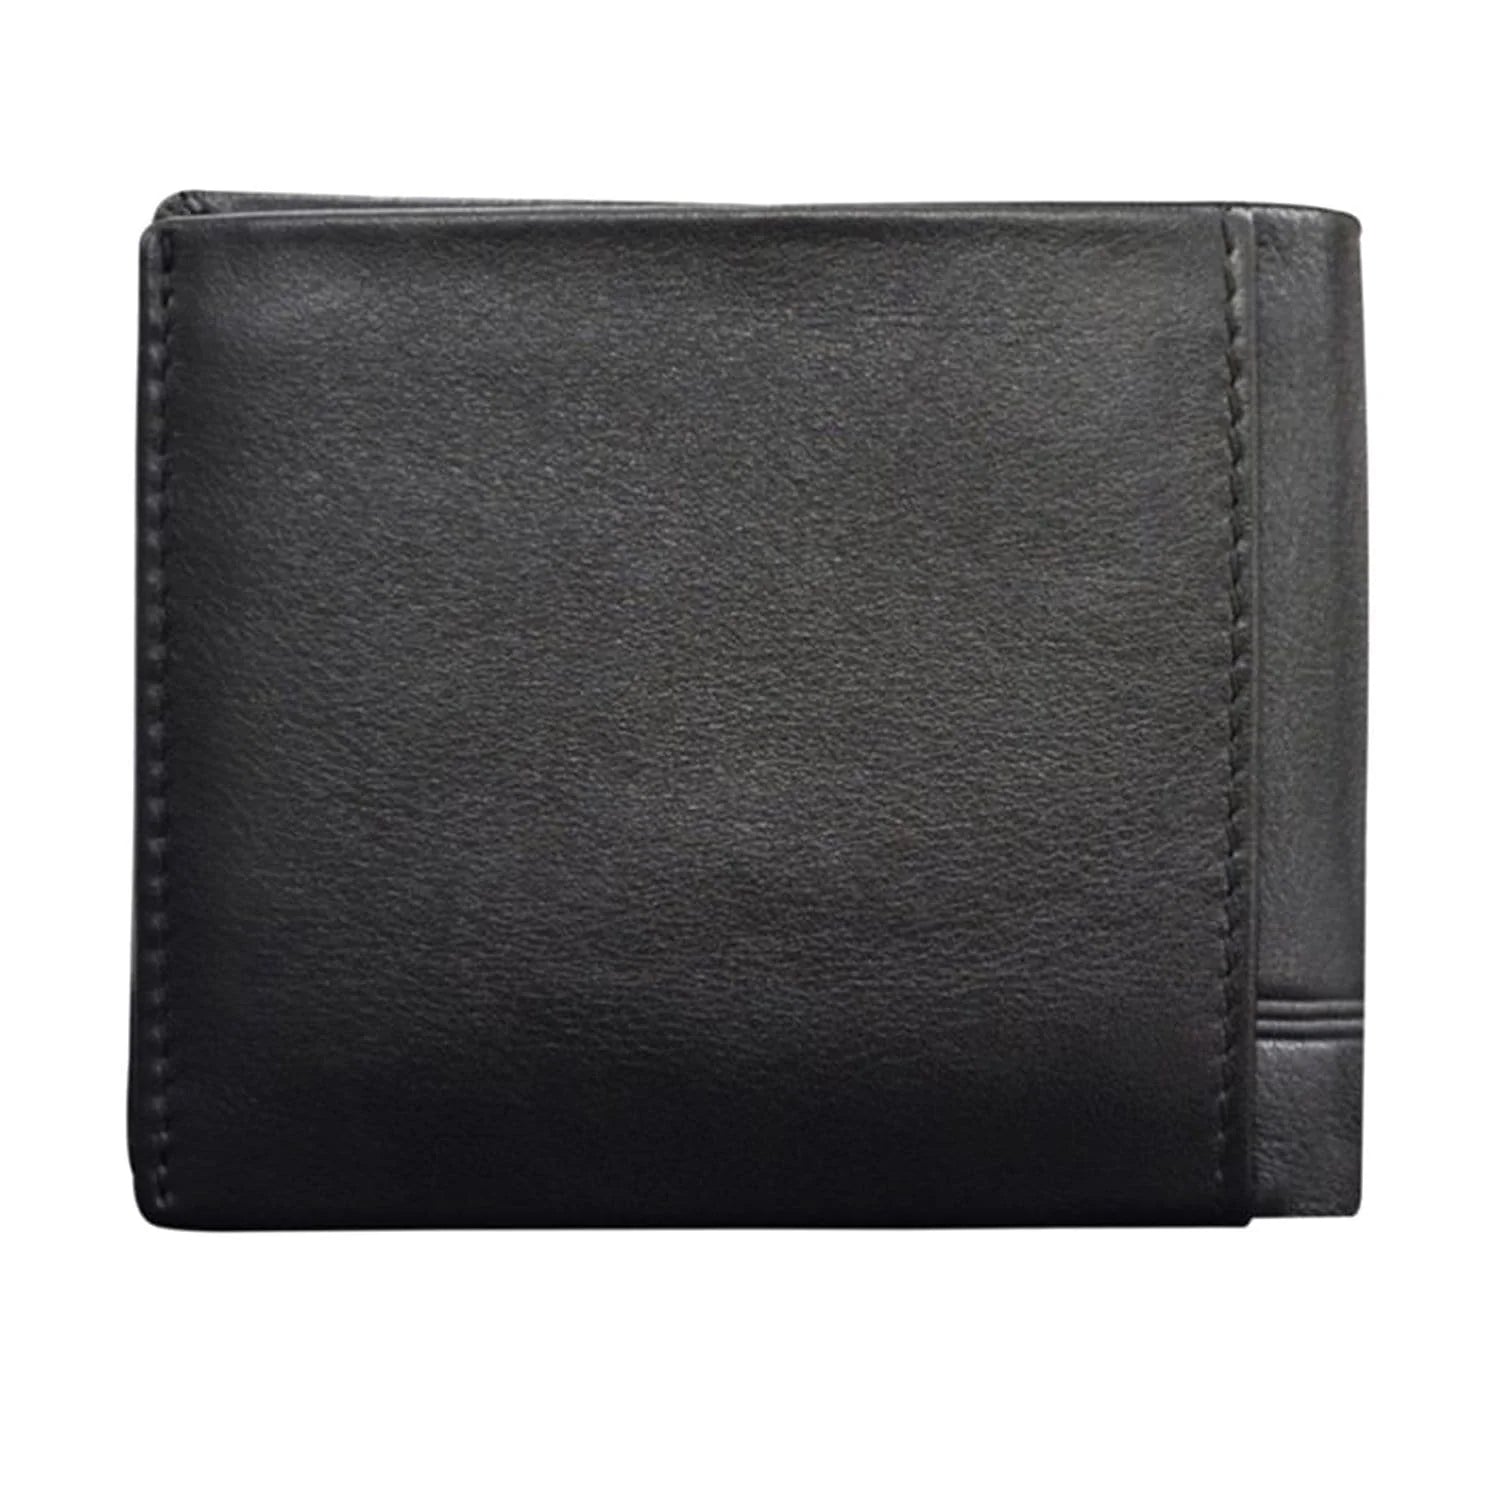 Cross Classic Century Slim Men's Wallet - Black - AC018121-1-1